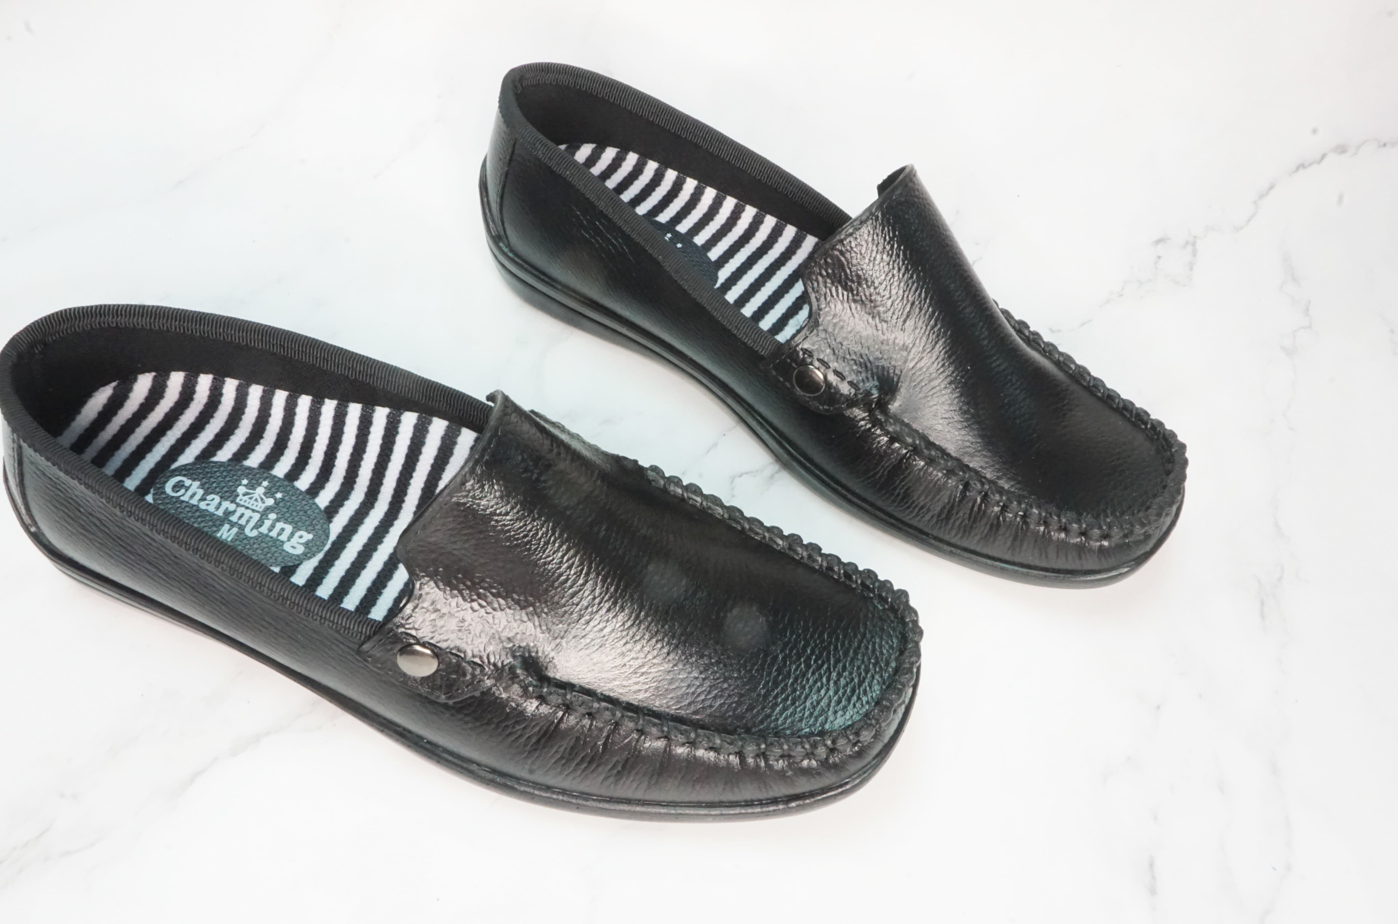 2300 Boat Rain Shoes (Japan)-Charming-BE-JP Size-2: 35S-偉豐鞋 WELL SHOE HK-Well Shoe-偉豐鞋-偉豐網-荃灣鞋店-Functional shoes-Hong Kong Tsuen Wan Shoe Store-Tai Wan Shoe-Japan Shoe-高品質功能鞋-台灣進口鞋-日本進口鞋-High-quality shoes-鞋類配件-荃灣進口鞋-香港鞋店-優質鞋類產品-水靴-帆布鞋-廚師鞋-香港鞋品牌-Hong Kong Shoes brand-長者鞋-Hong Kong Rain Boots-Kitchen shoes-Cruthes-Slipper-Well Shoe Hong Kong-Anello-Arriba-休閒鞋-舒適鞋-健康鞋-皮鞋-Healthy shoes-Leather shoes-Hiking shoes